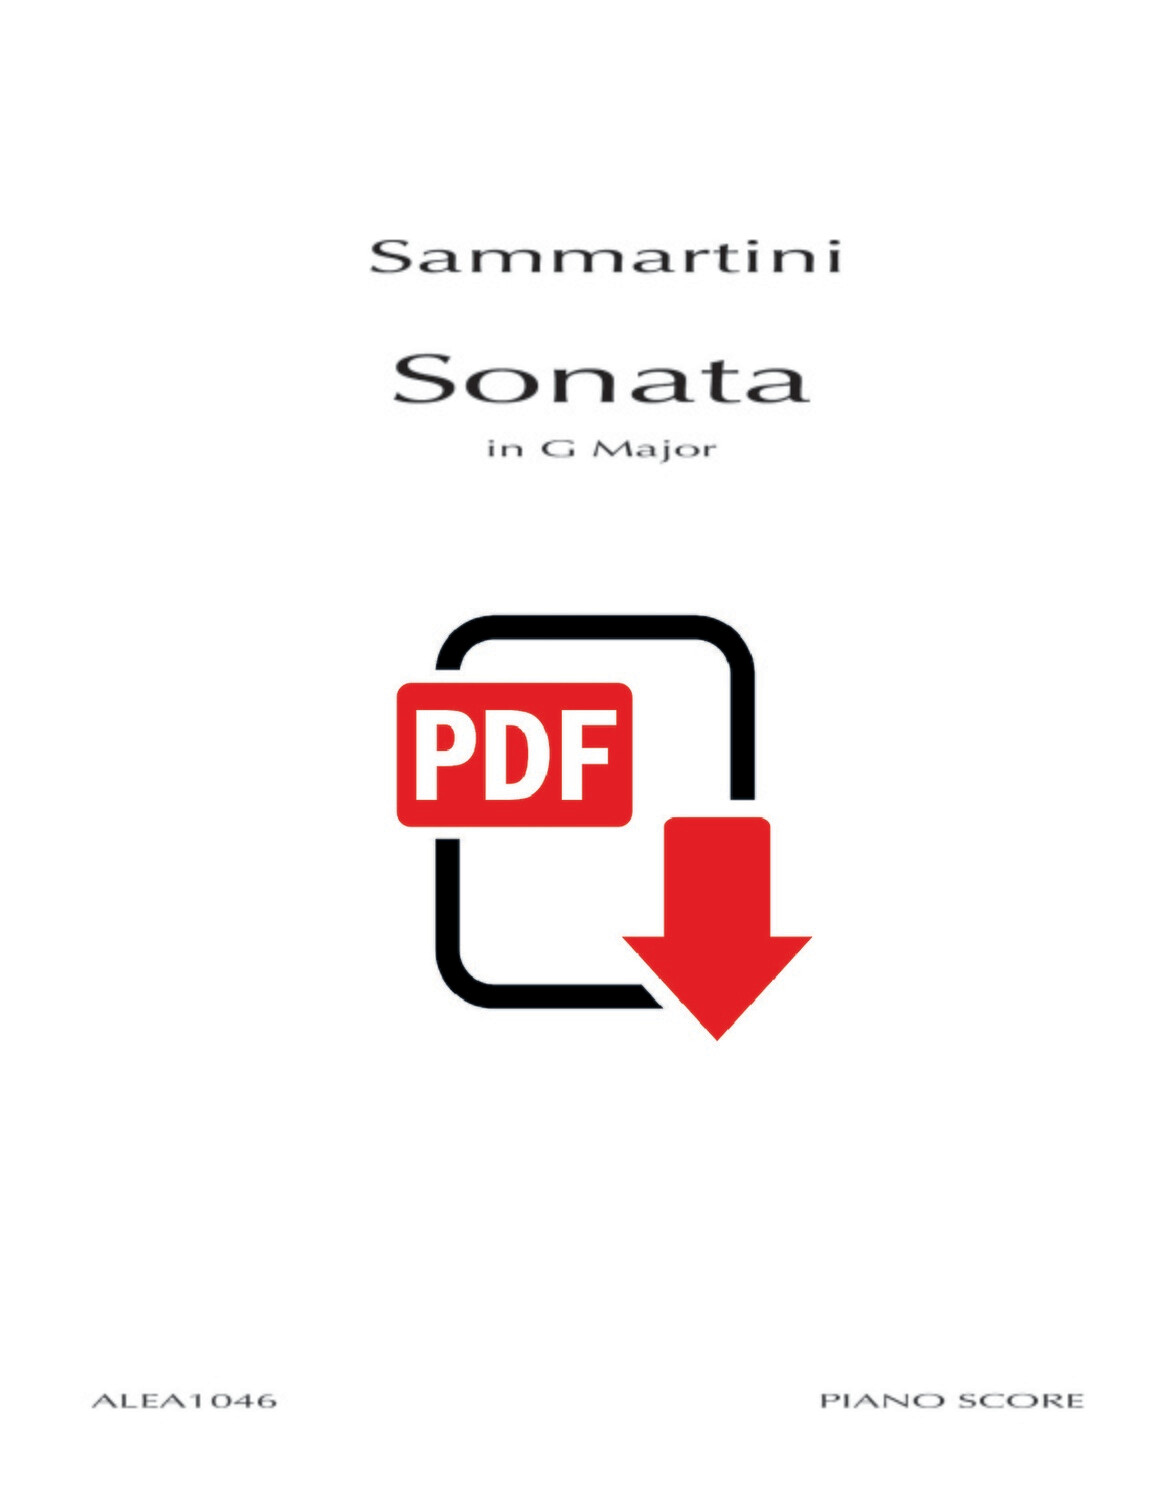 Sammartini: Sonata in G Major (PDF)